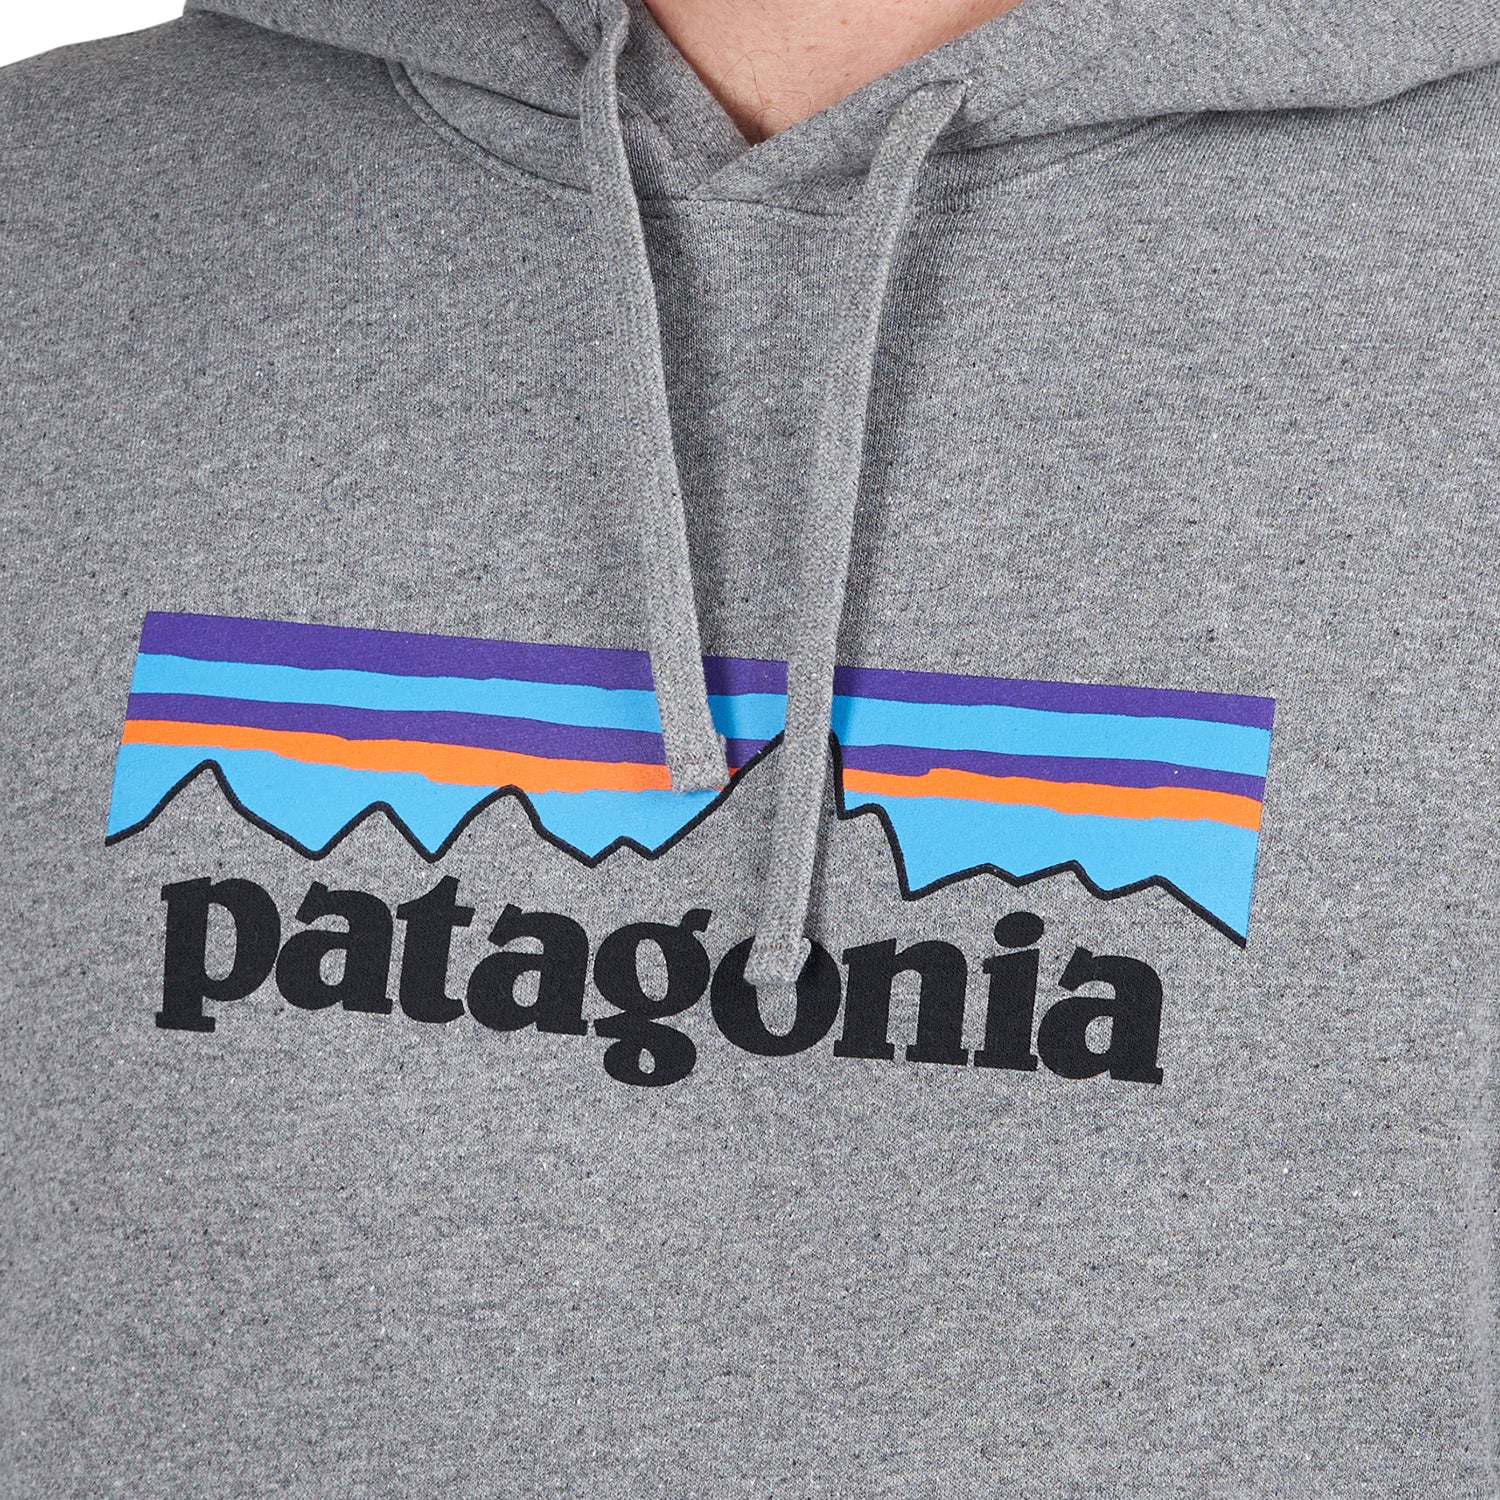 Patagonia P-6 Logo Uprisal Hoodie (Grau)  - Allike Store